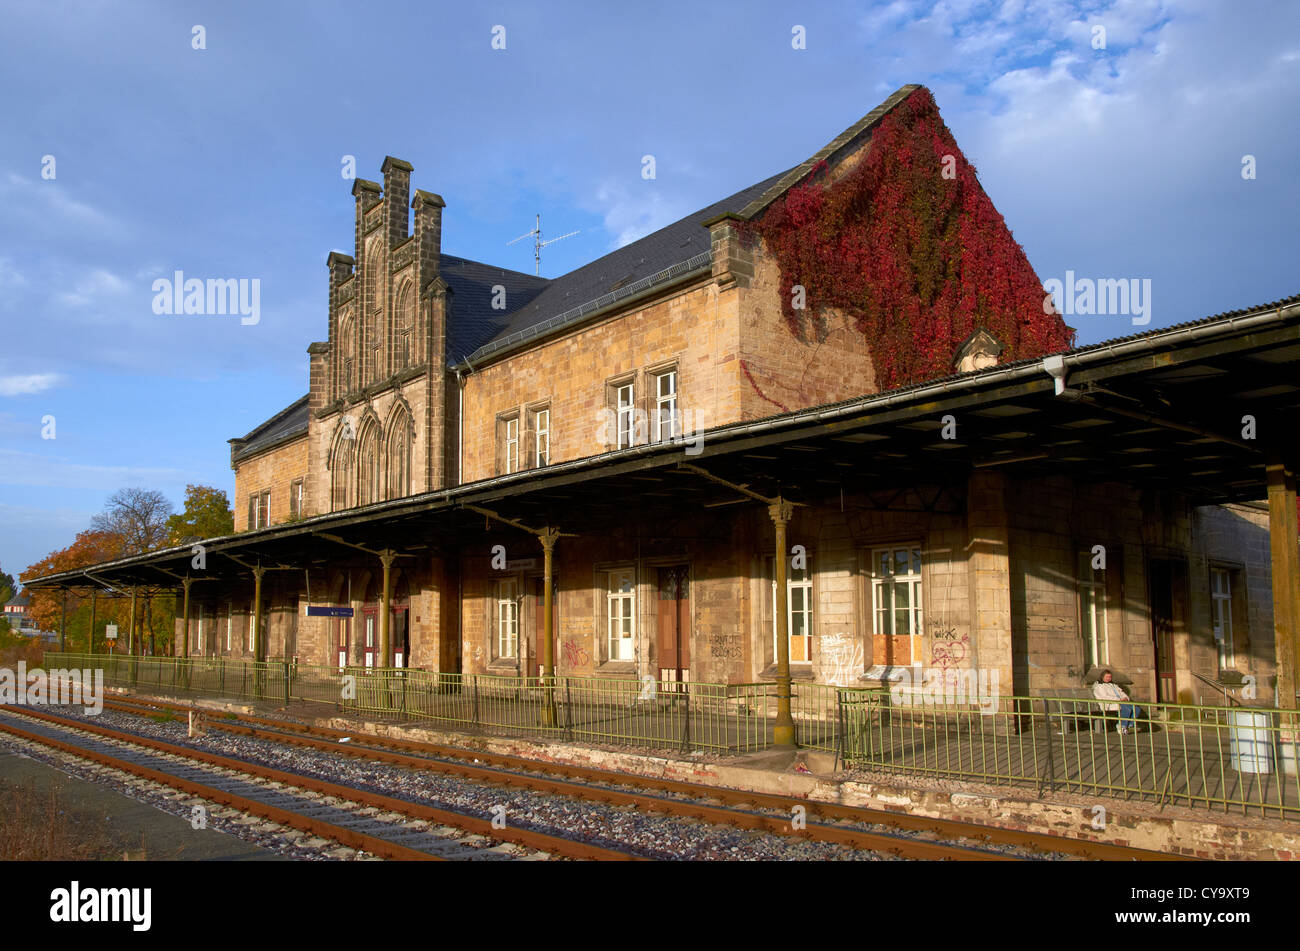 Quedlinburg Bahnhof (railway station) - mainline side showing impressive but largely disused station building. Stock Photo